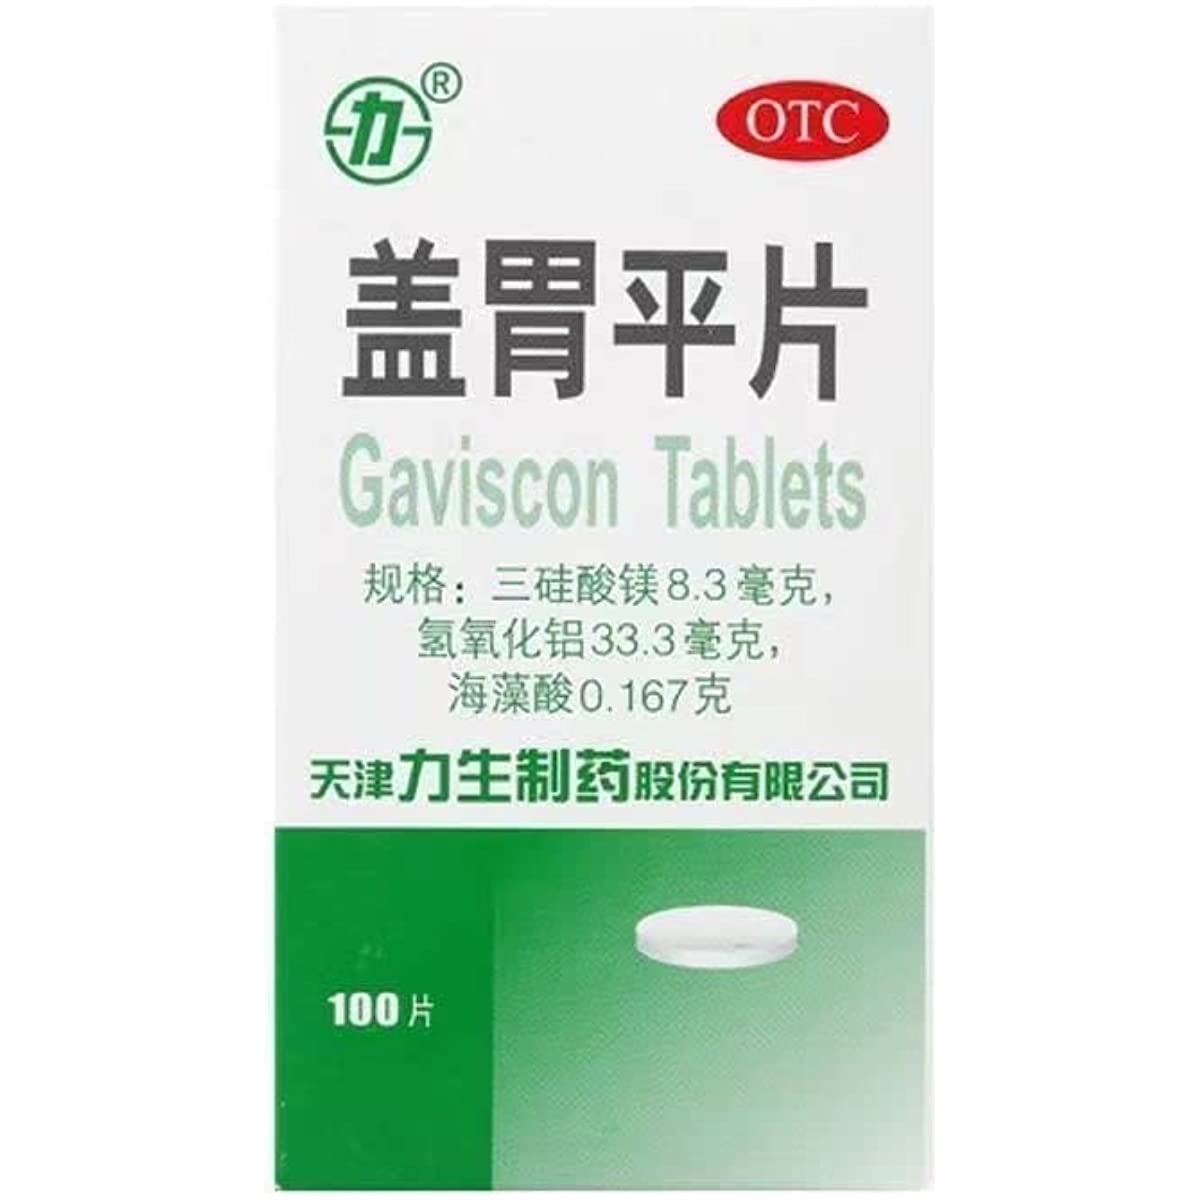 1 Box, Gaiweiping Pian 100 Tablets / Box 盖胃平片